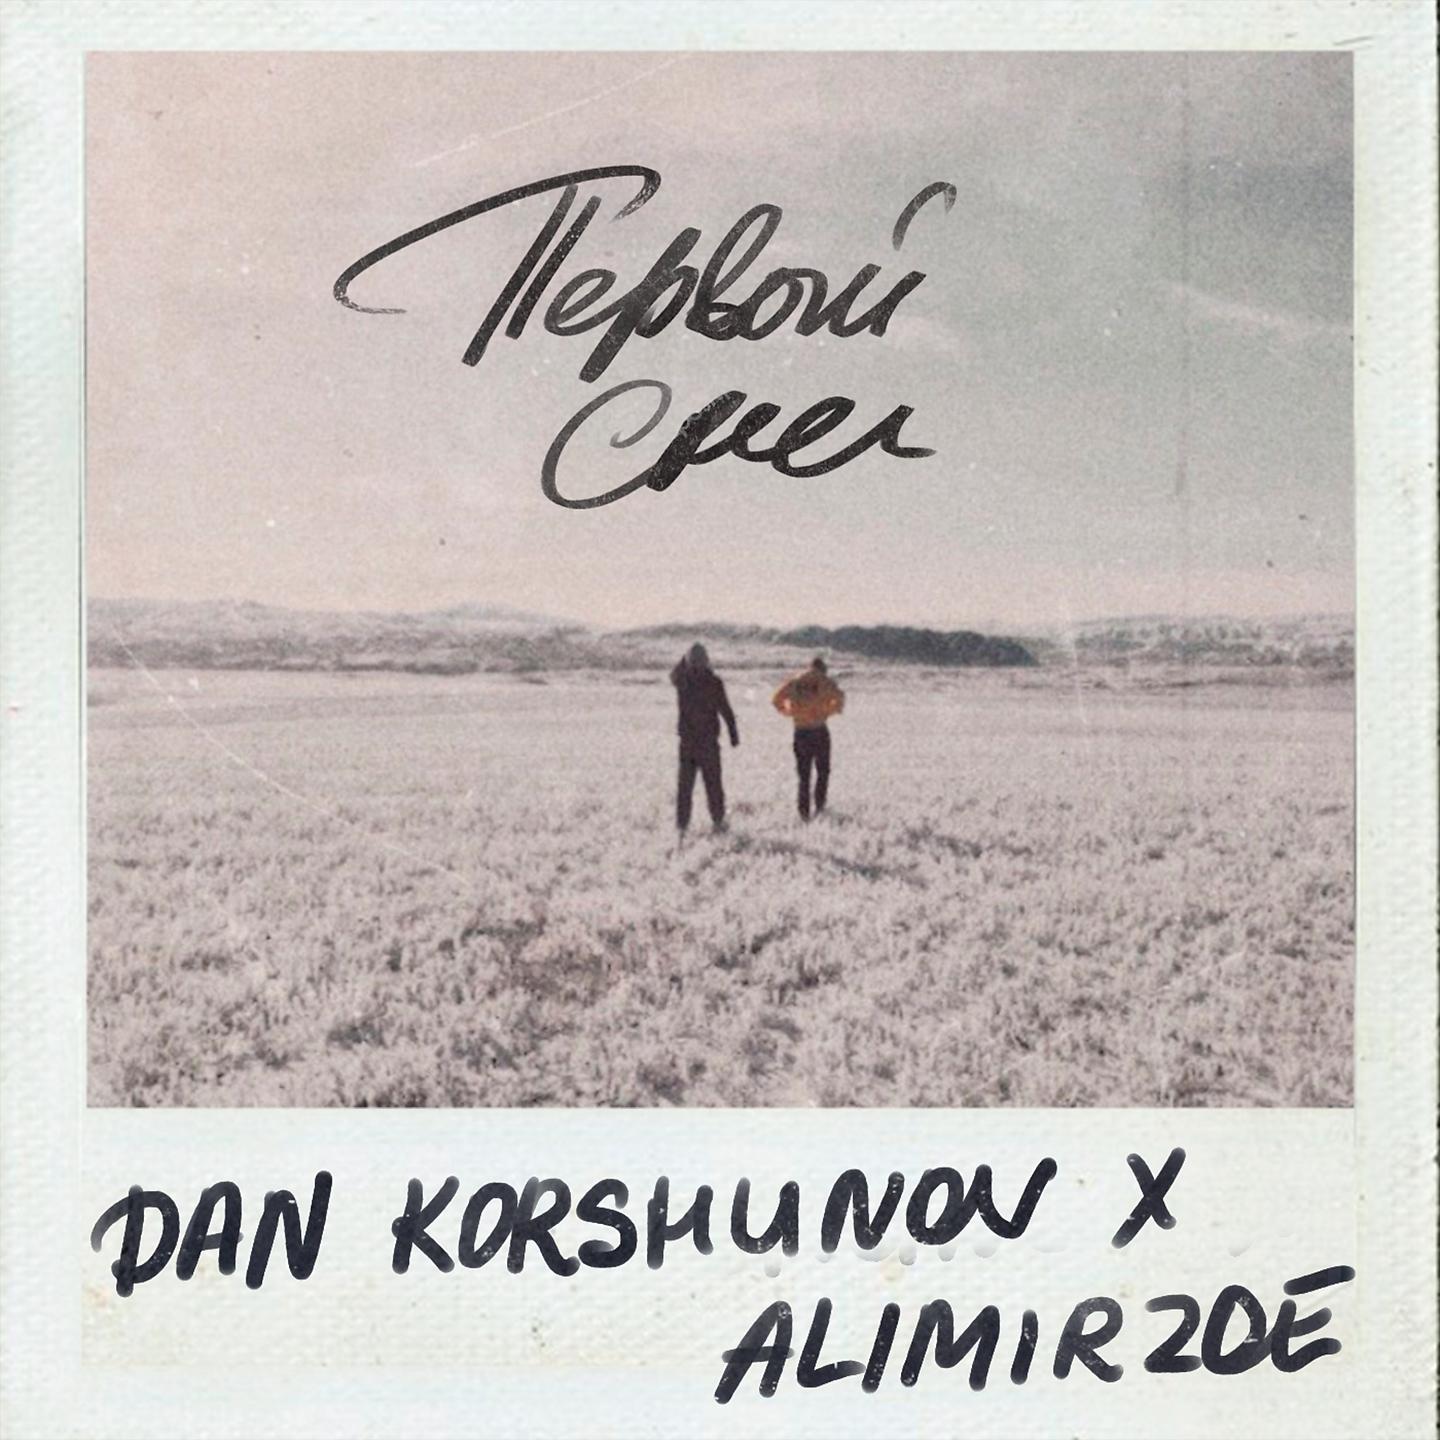 Dan Korshunov, Alimirzoe - Первый снег